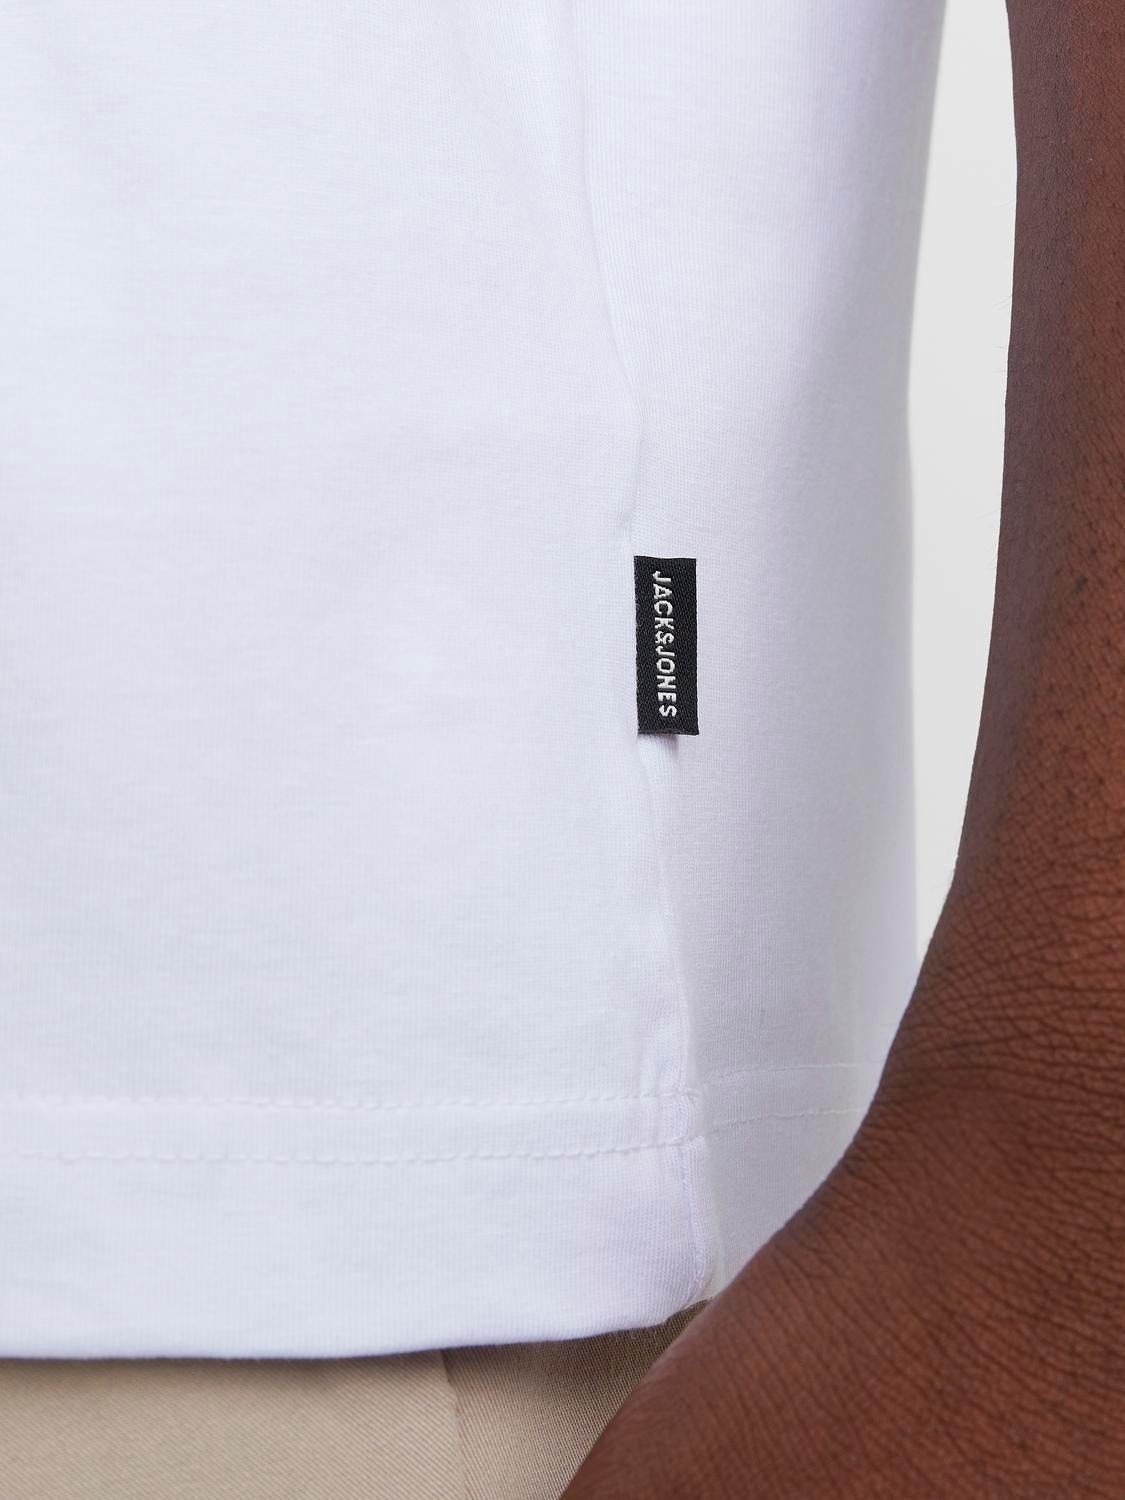 Jack & Jones T-shirt Liso Decote Redondo -White - 12254412